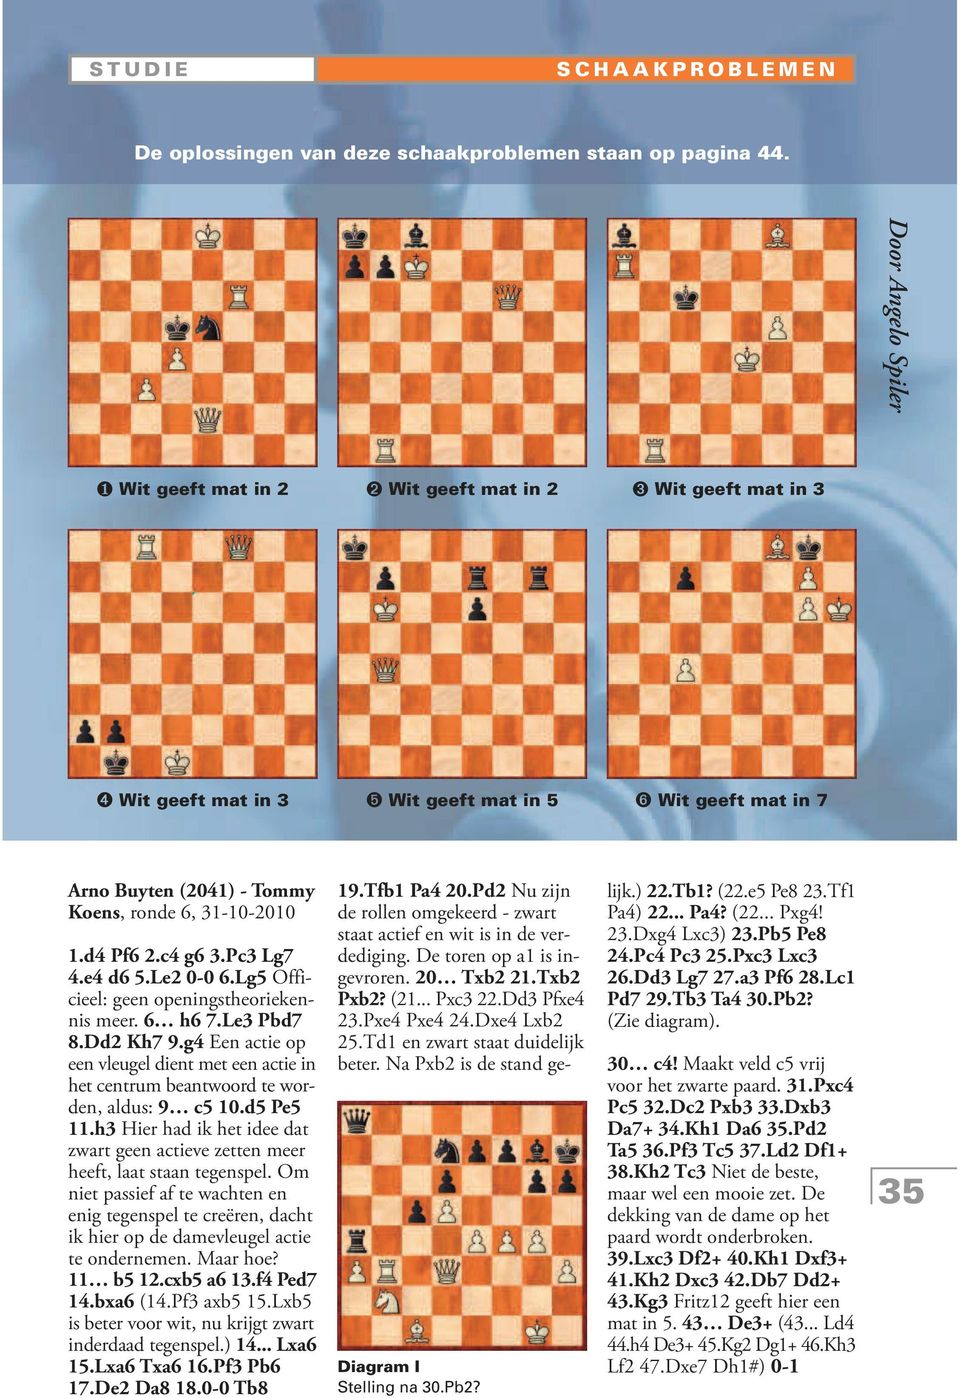 1.d4 Pf6 2.c4 g6 3.Pc3 Lg7 4.e4 d6 5.Le2 0-0 6.Lg5 Officieel: geen openingstheoriekennis meer. 6 h6 7.Le3 Pbd7 8.Dd2 Kh7 9.